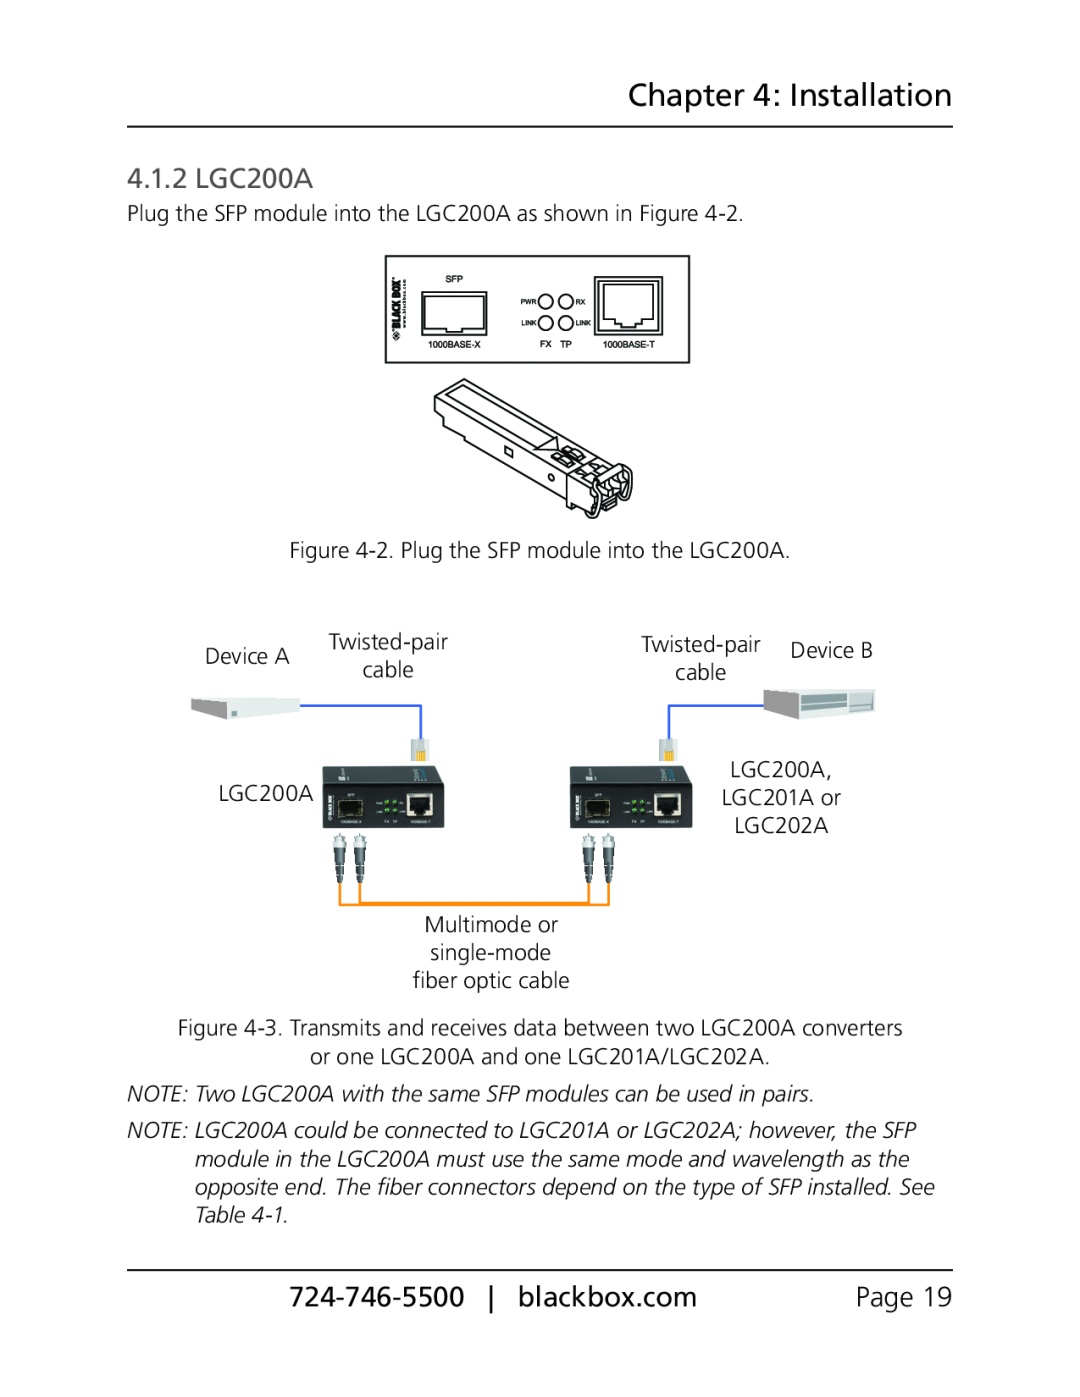 Black Box pure networking gigabit media converters, LGC202A, LGC201A manual 4.1.2 LGC200A, Installation 